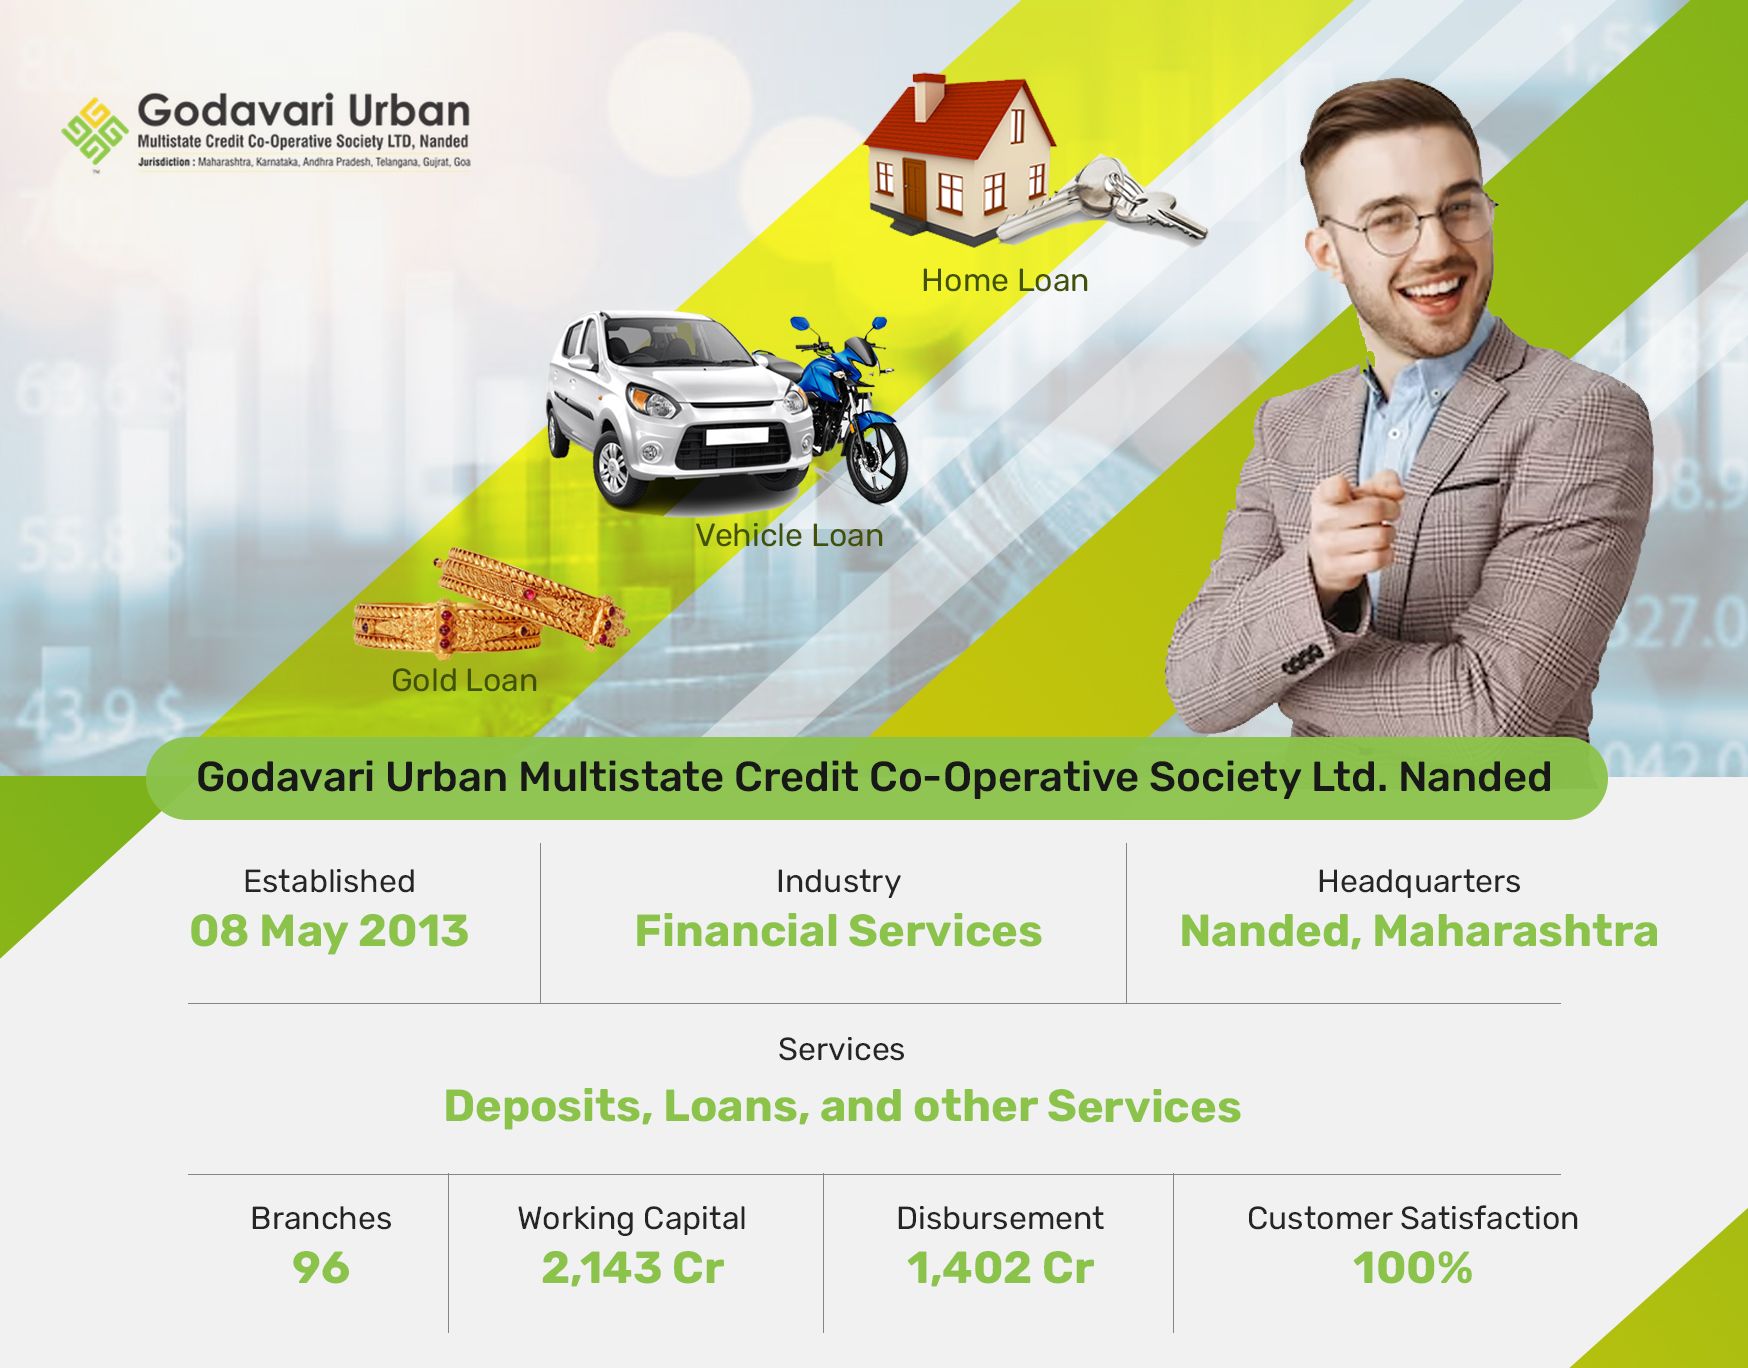 About Godavari Urban Multistate Credit Co-Operative Society Ltd